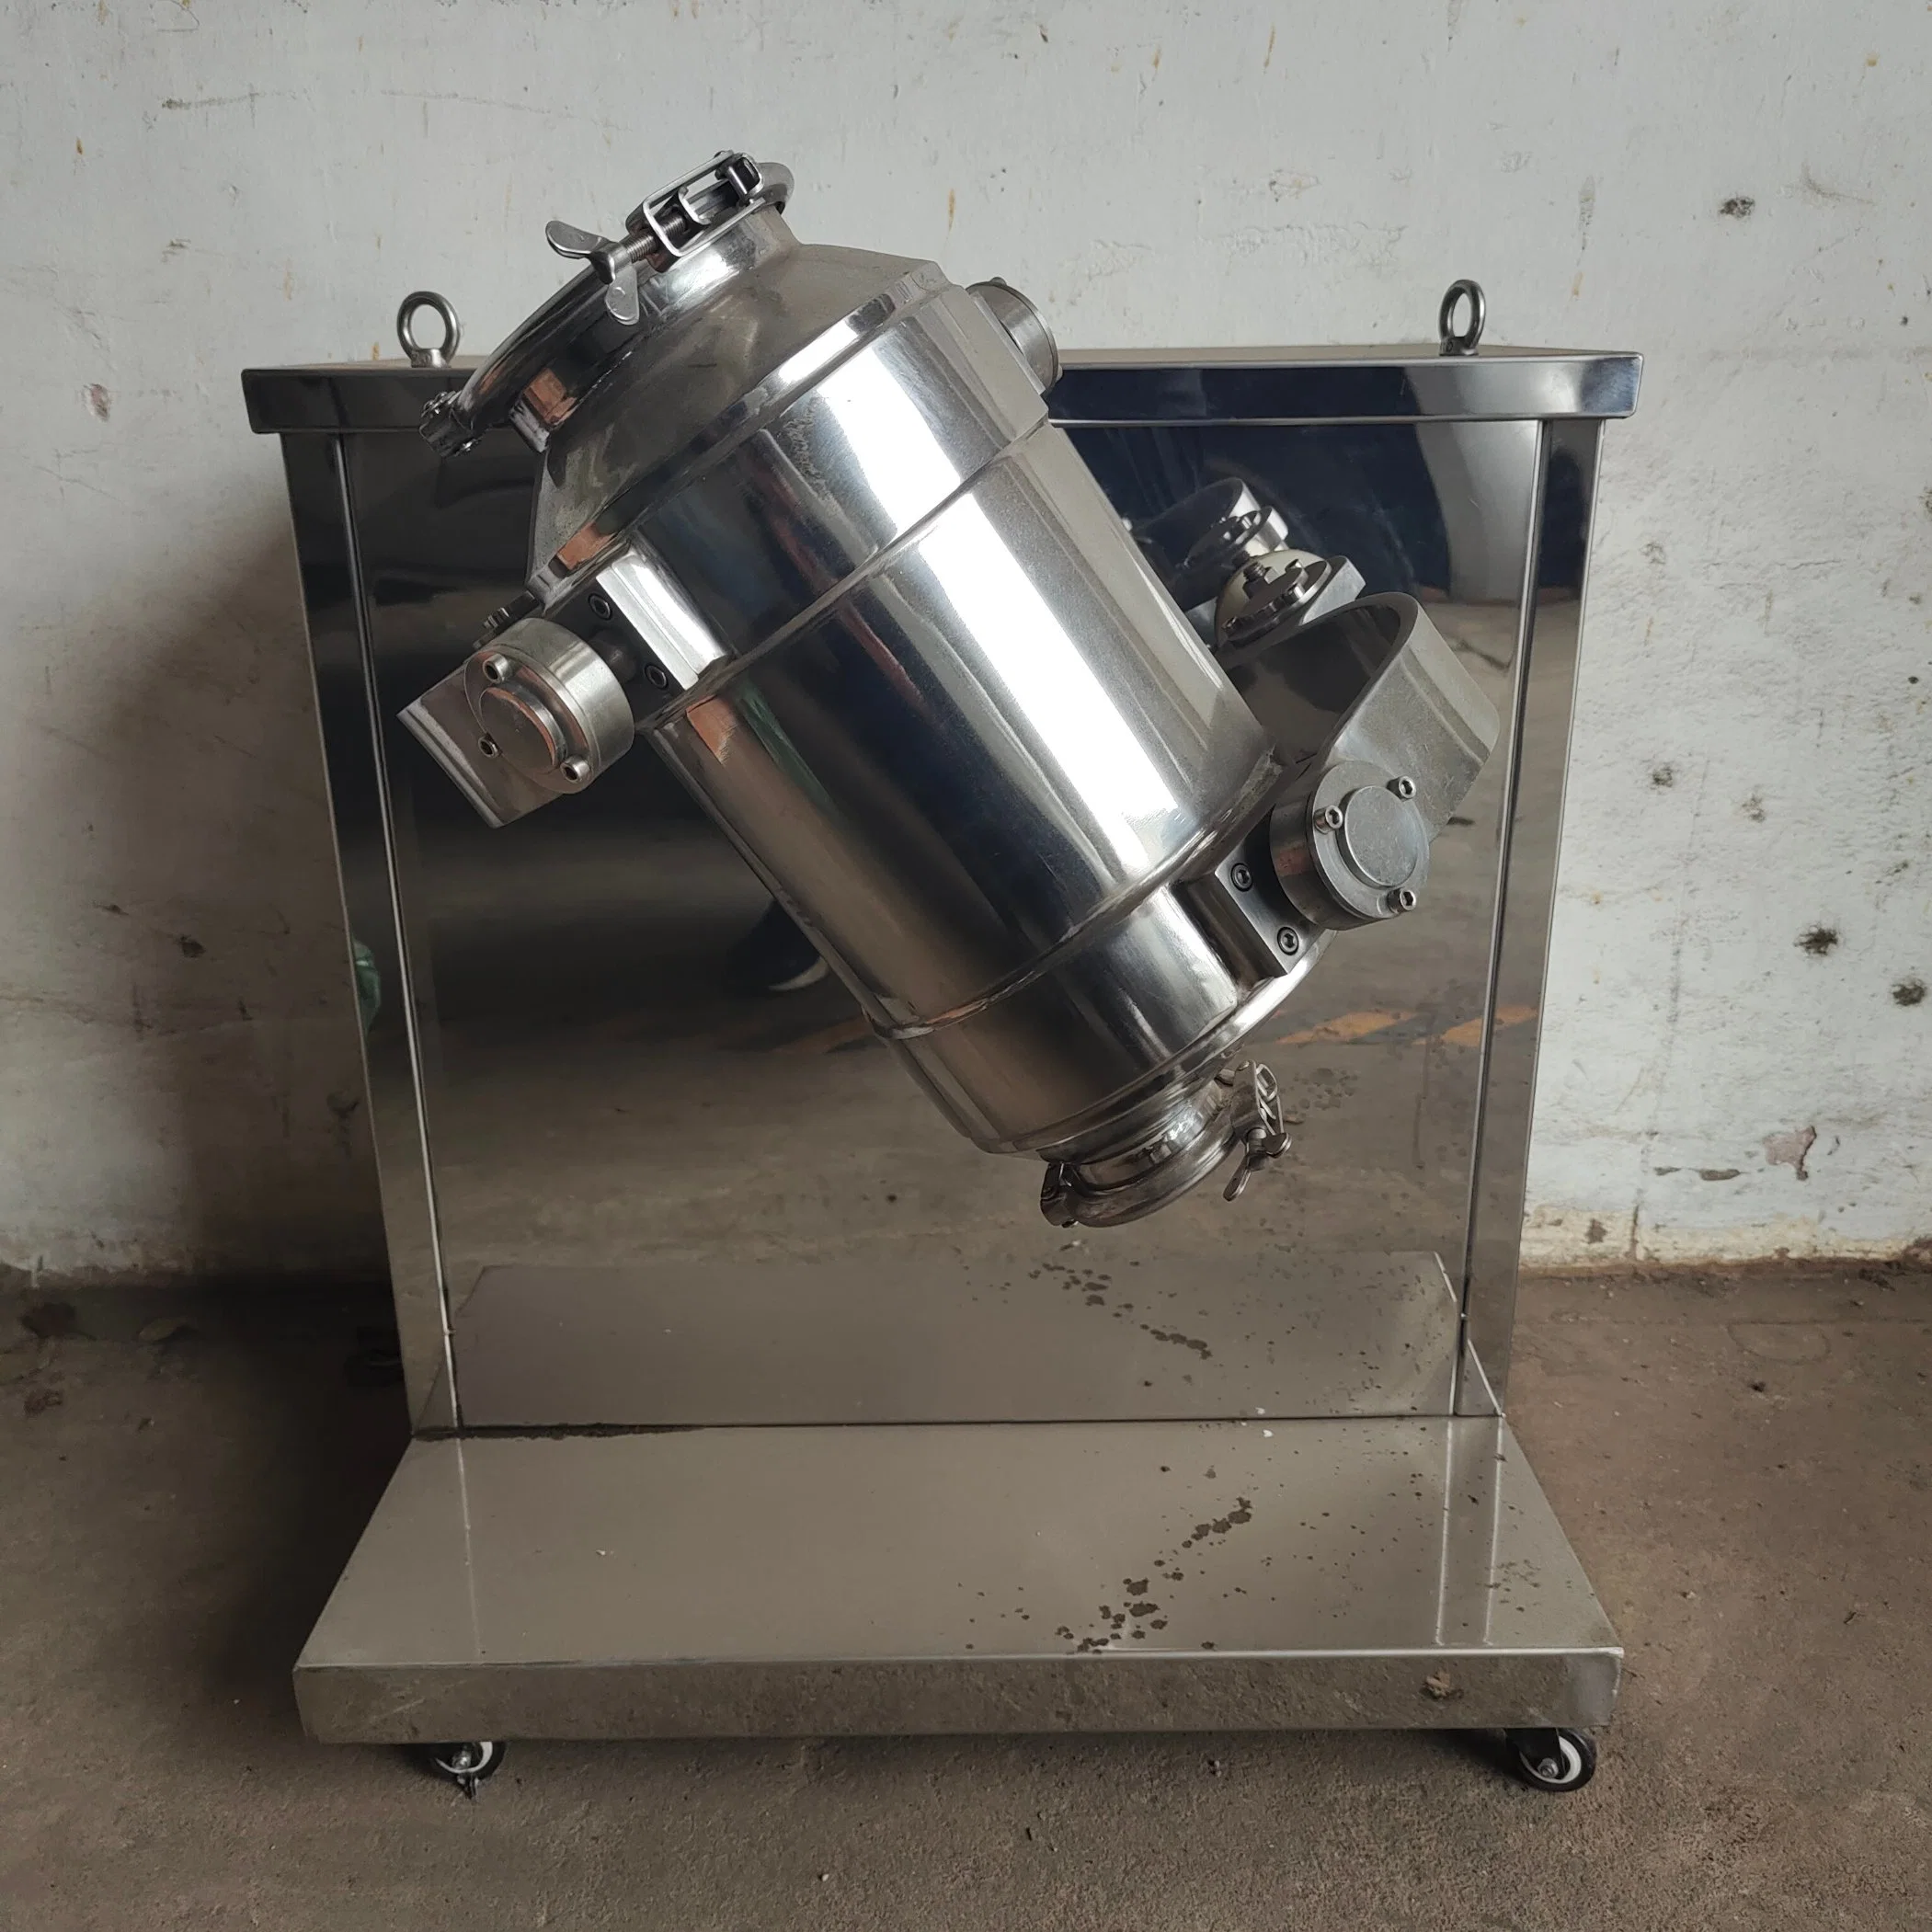 Syh-100 Series Three-Dimensional Motion Mixer for Laboratory Powder, Pepper, Graphite Powder